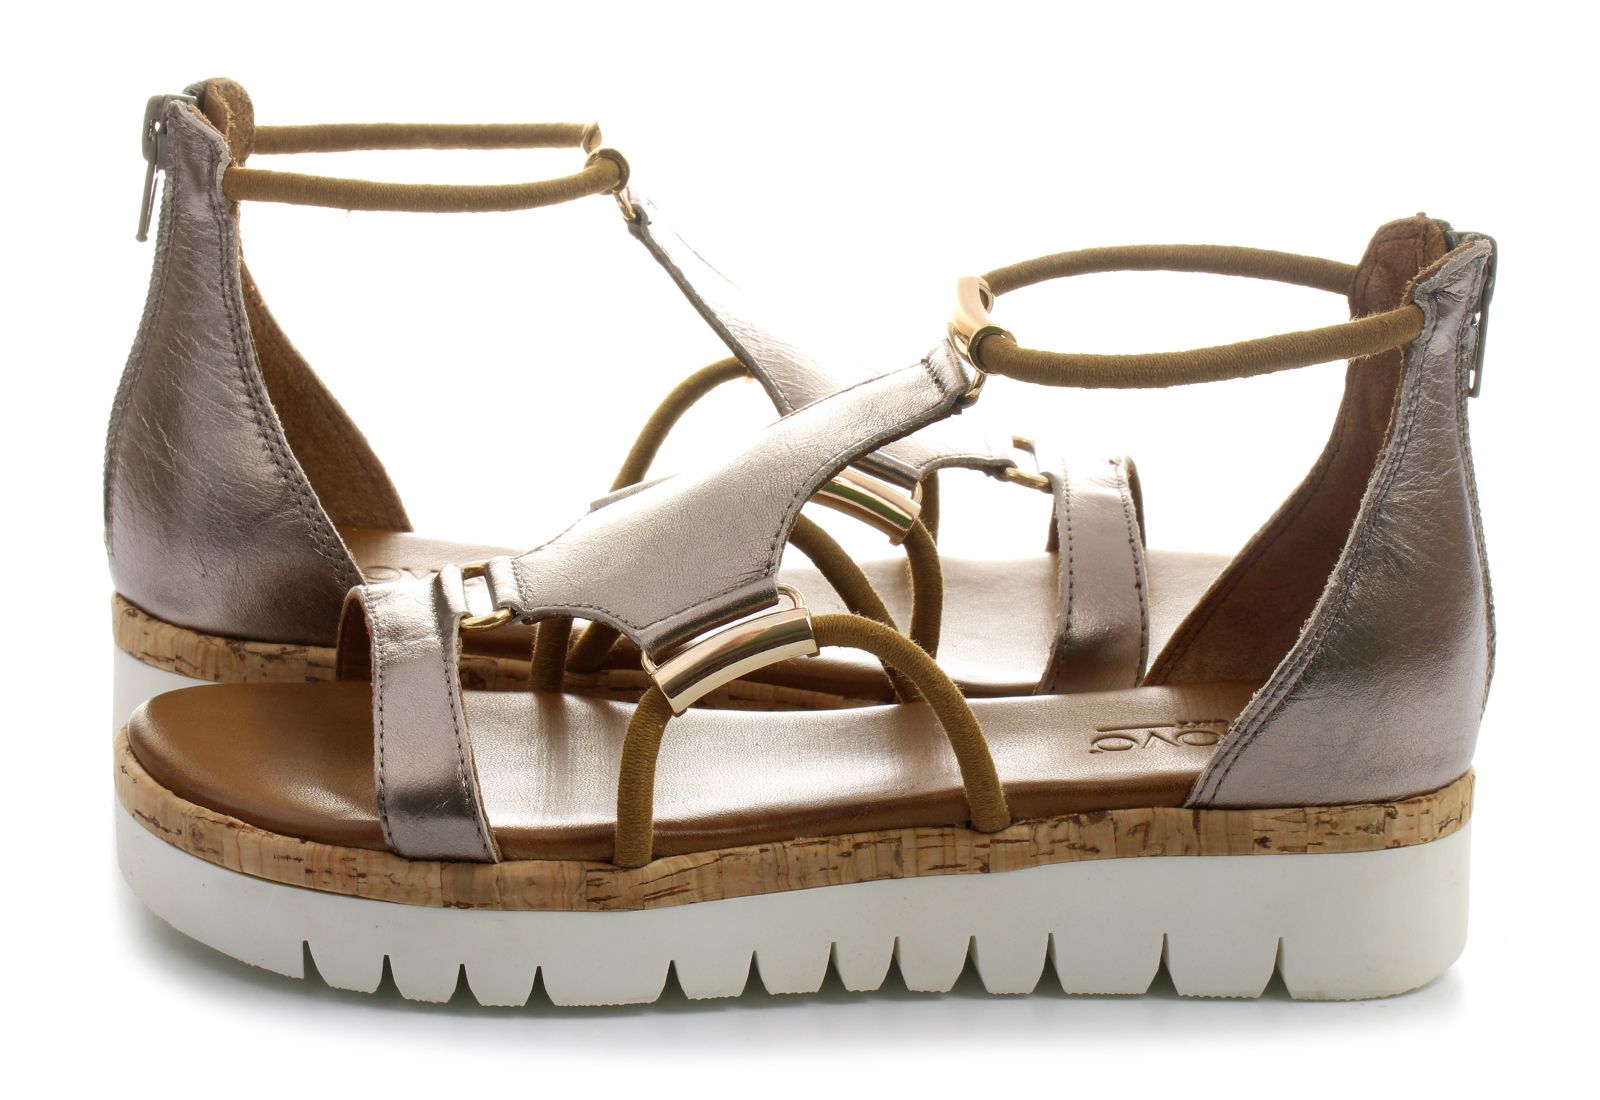 INUOVO Sandals – Sandals with platform heels in trendy designs